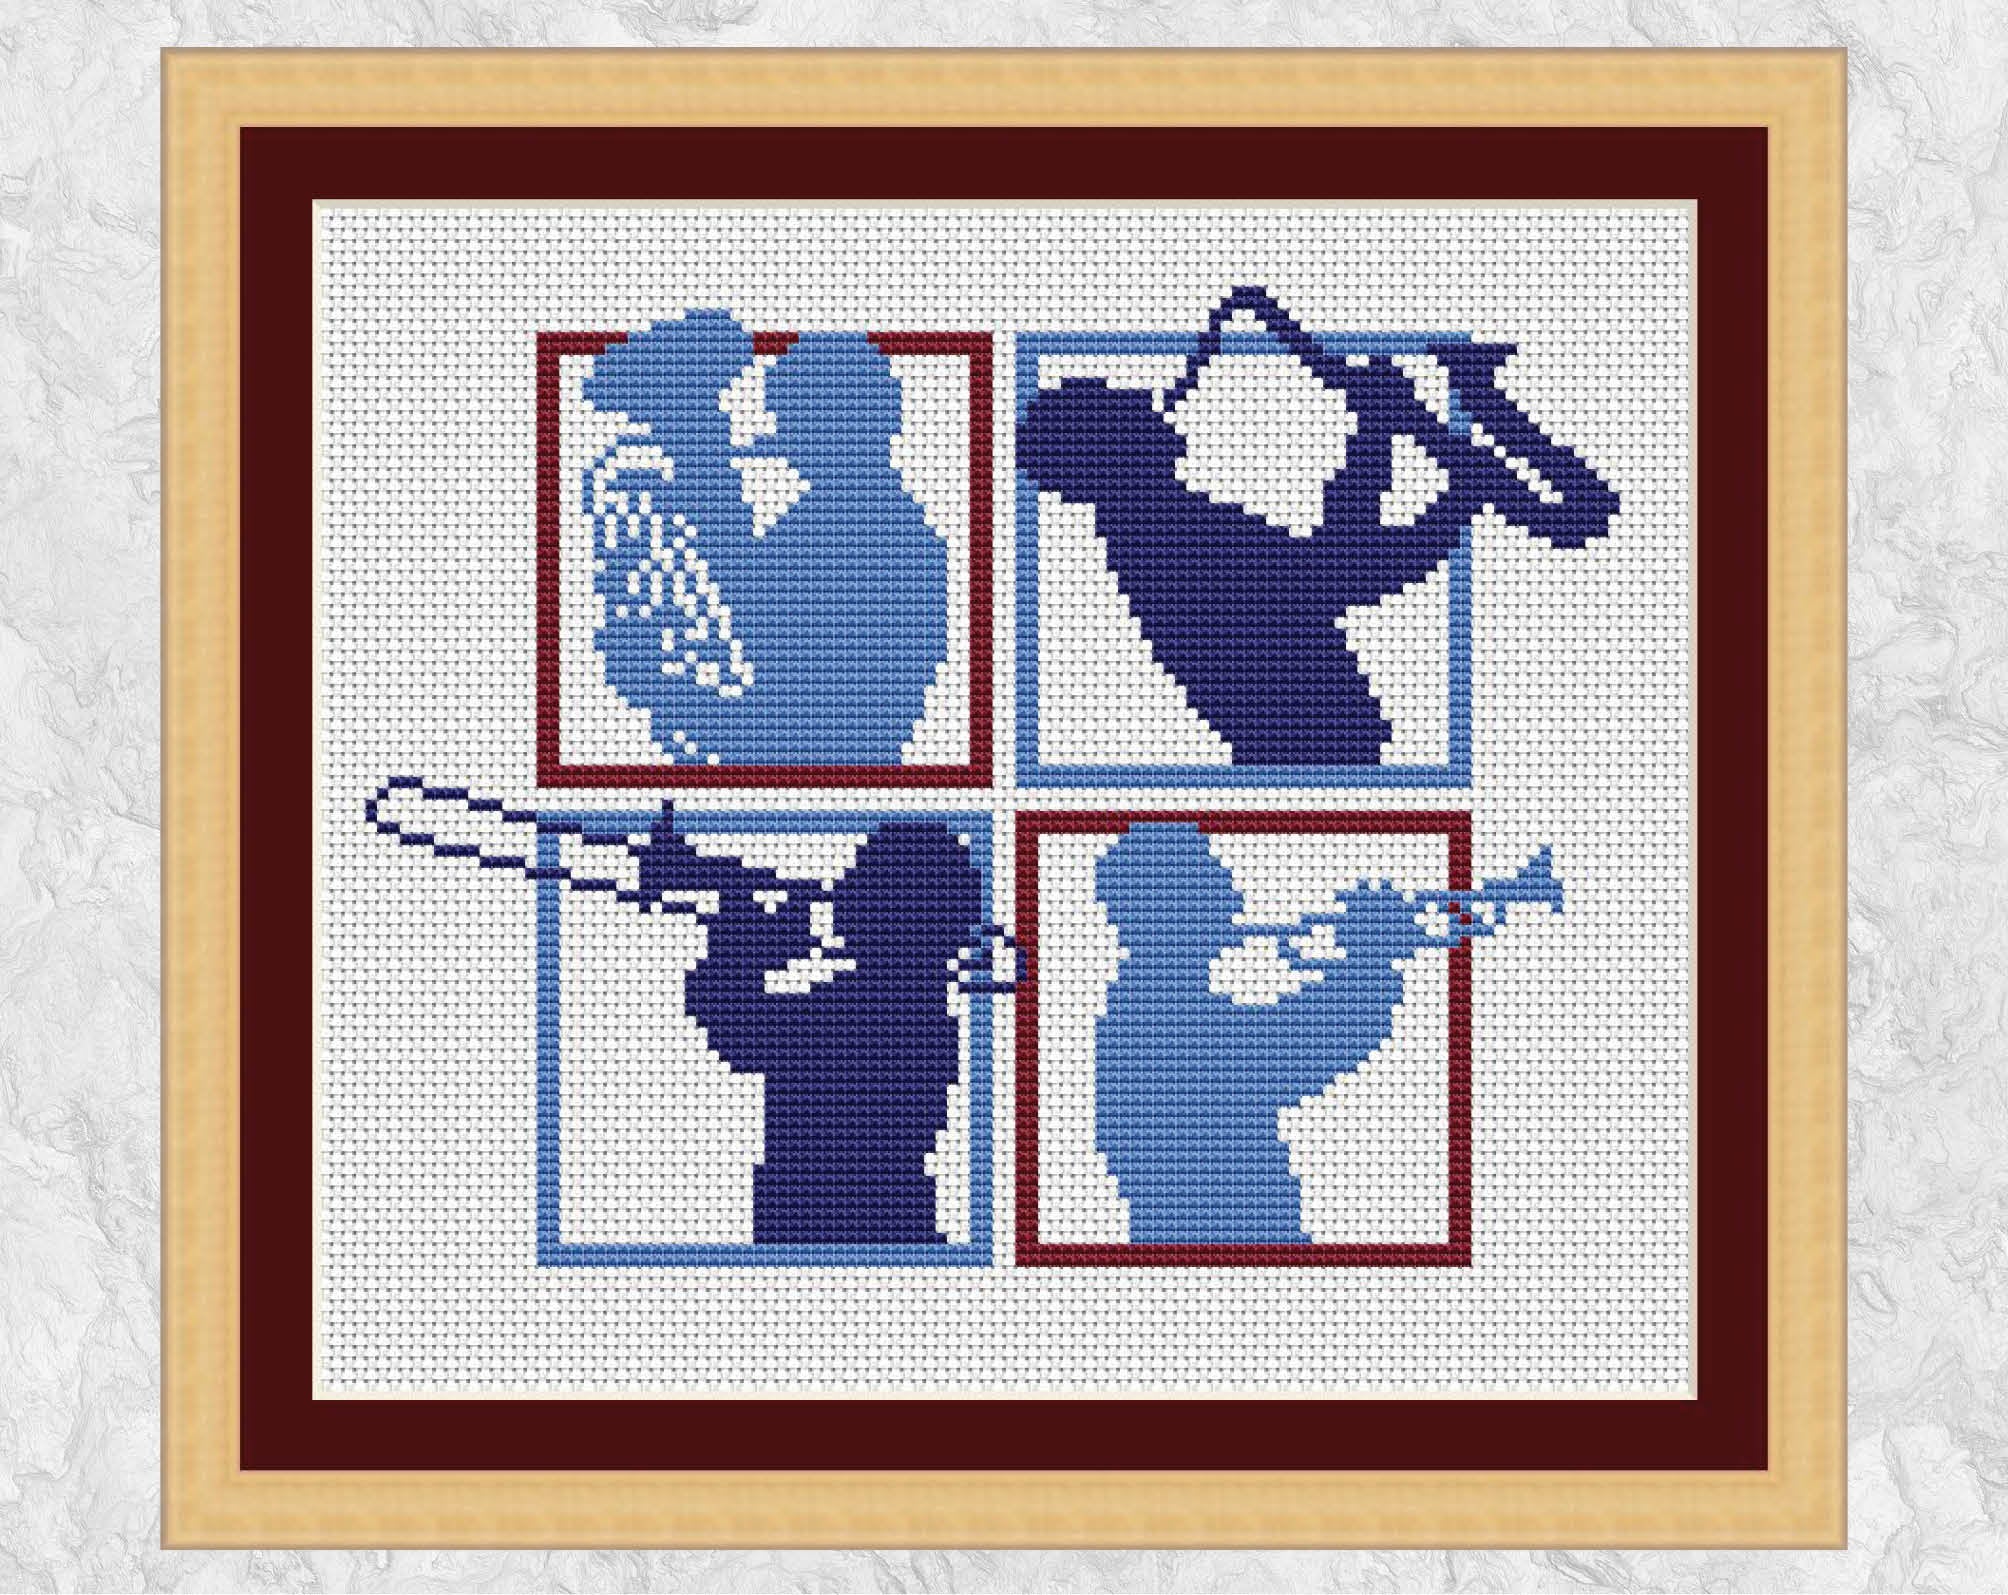 Brass Musicians cross stitch pattern - music pattern featuring euphonium, saxophone, trombone and trumpet